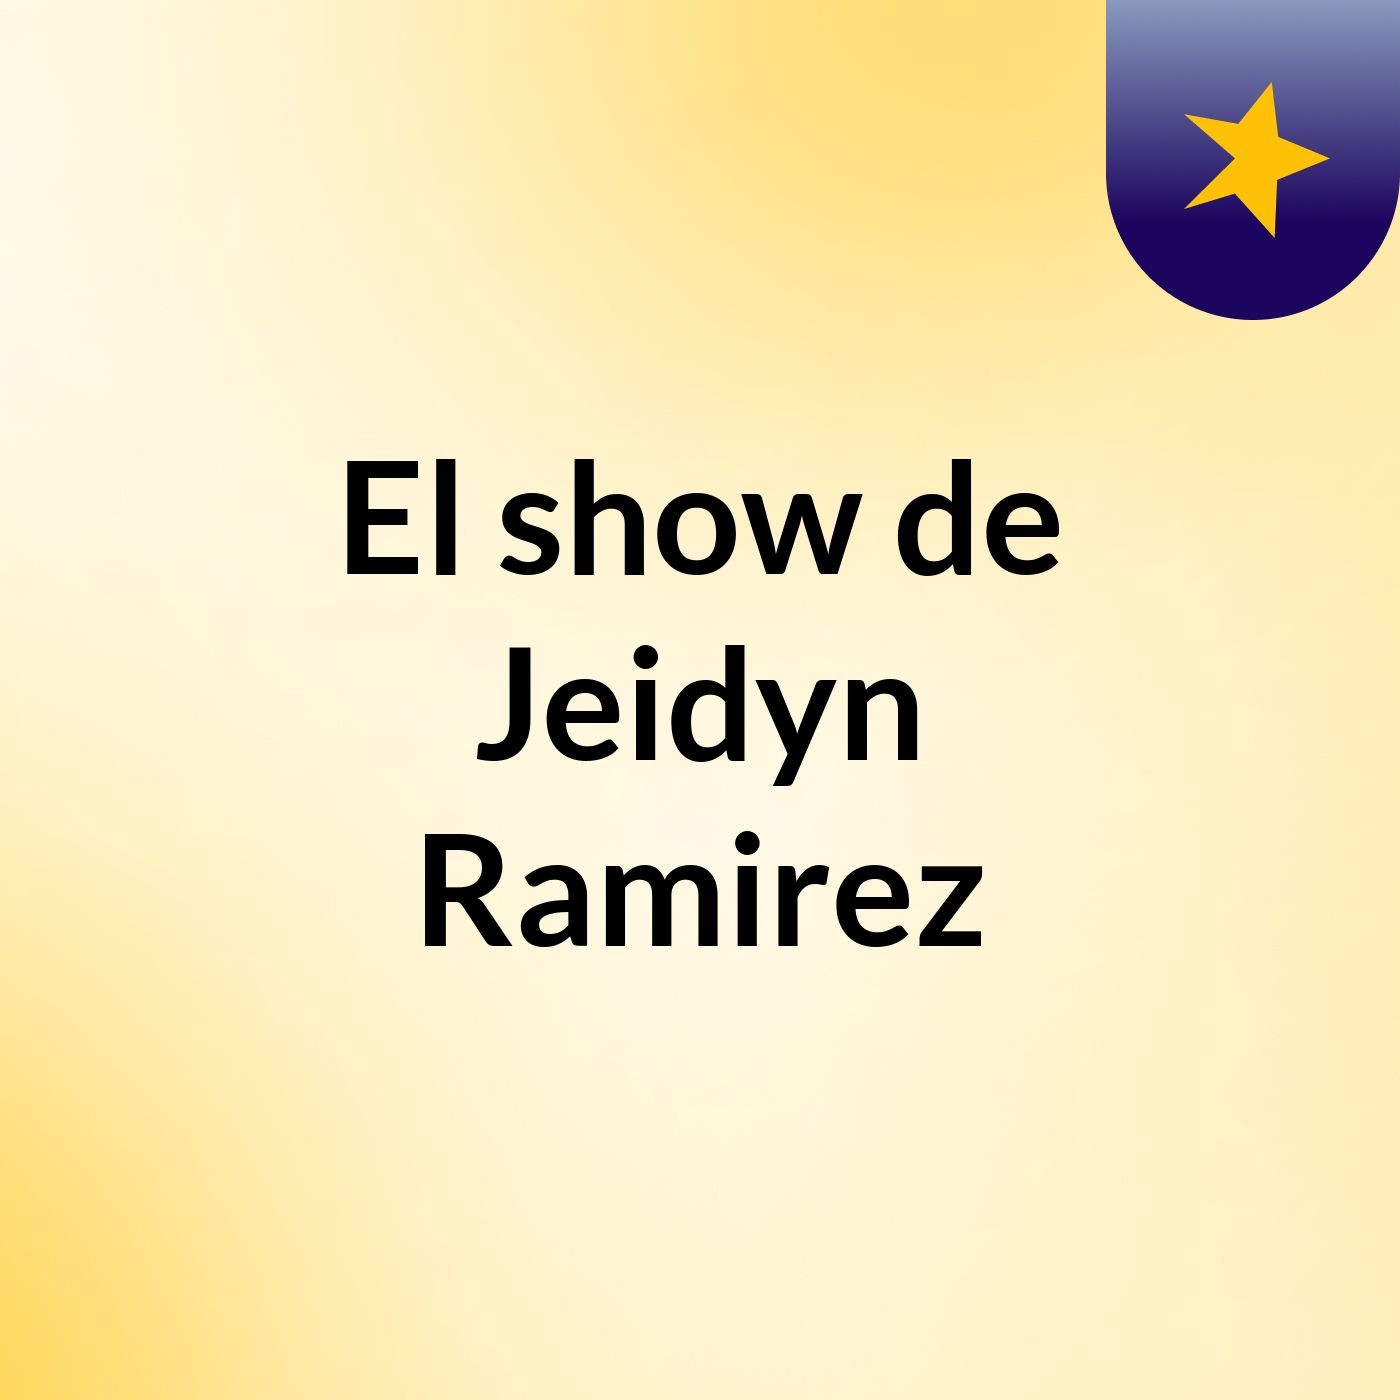 El show de Jeidyn Ramirez